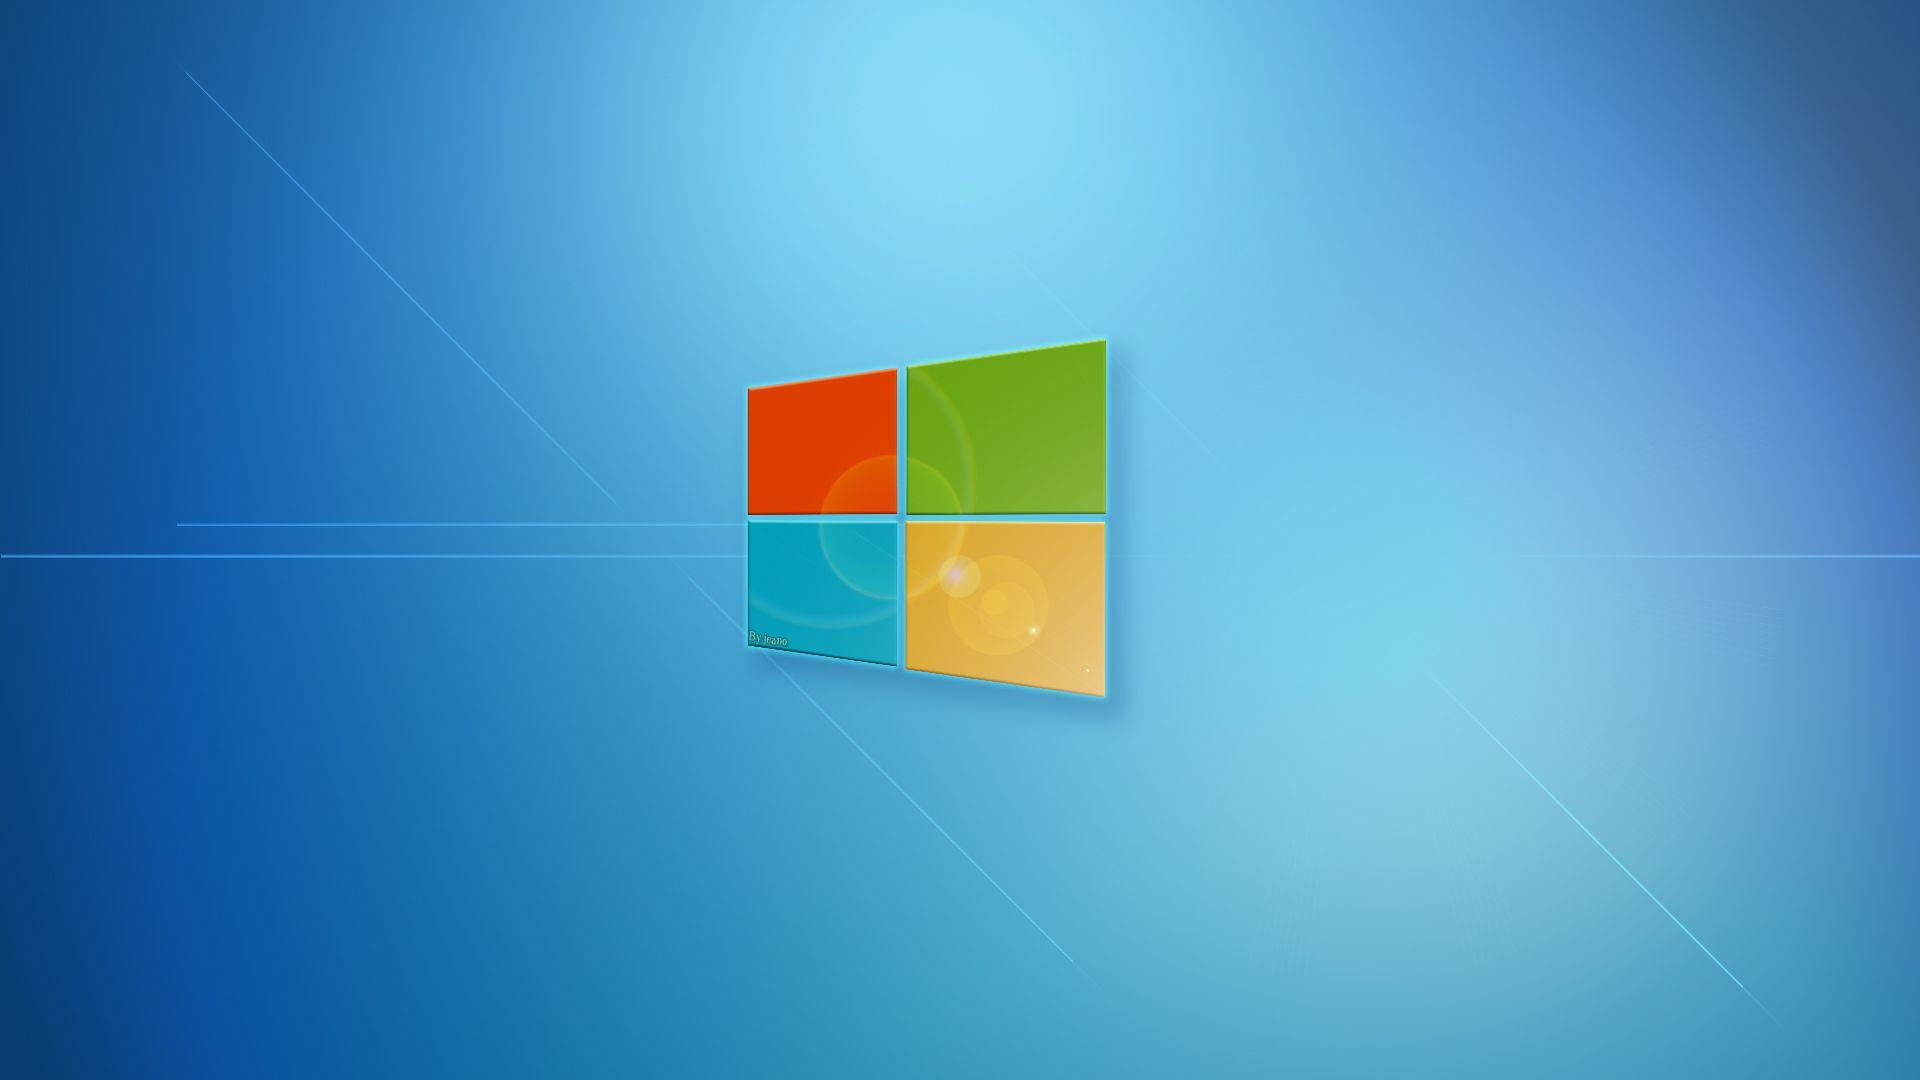 Wallpaper Windows 11, Microsoft, 8K, 4k, OS #24974